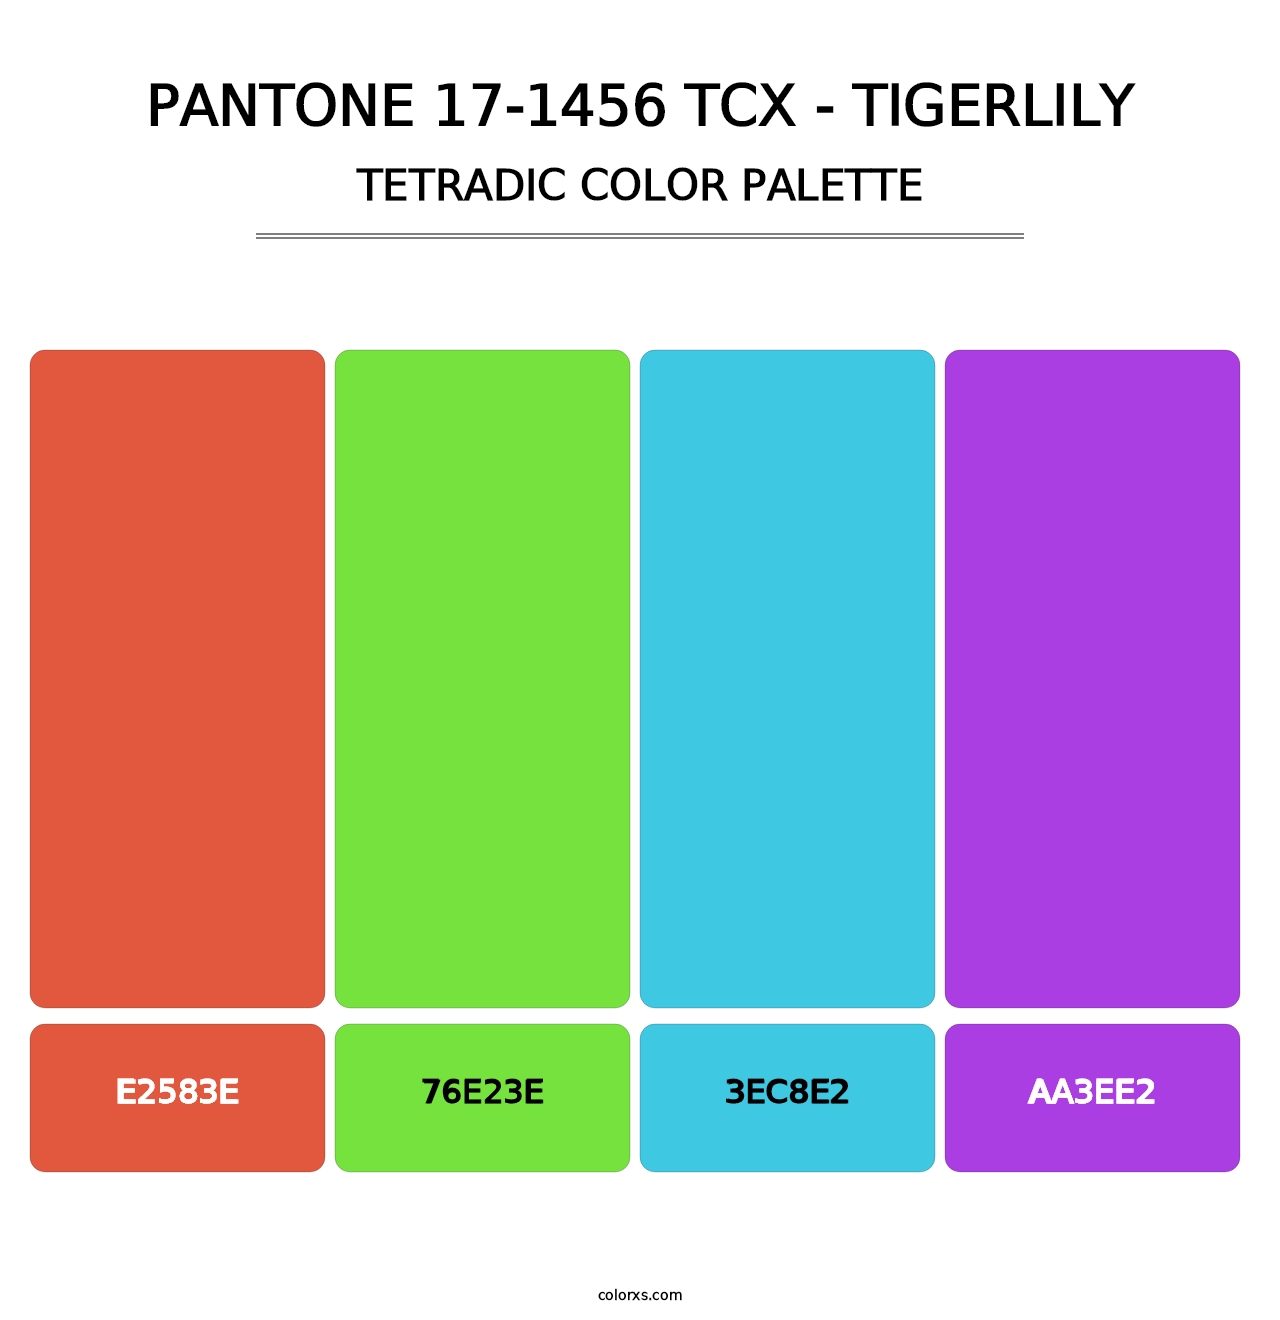 PANTONE 17-1456 TCX - Tigerlily - Tetradic Color Palette